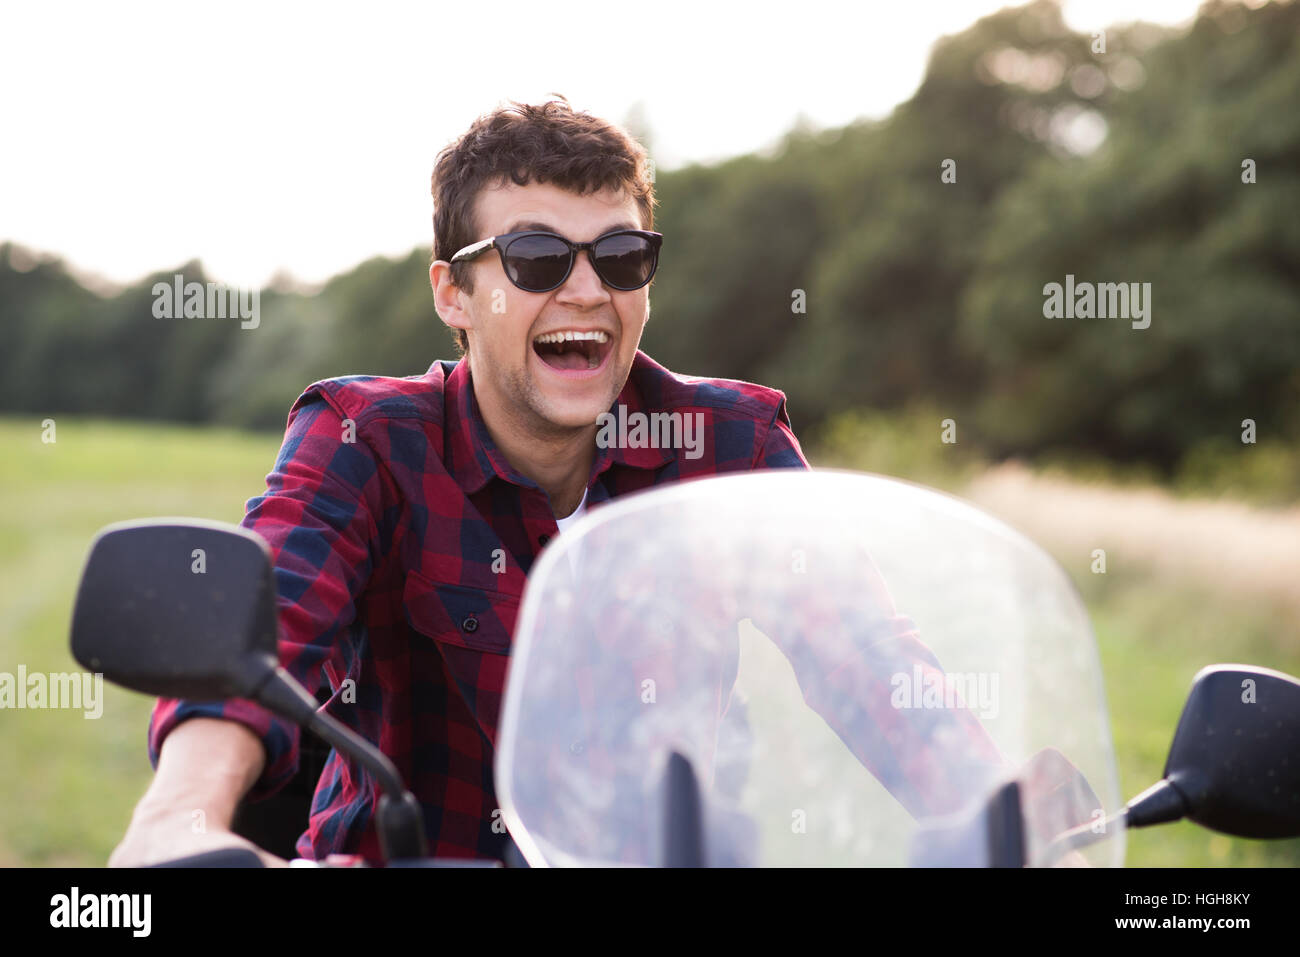 Young man enjoying a motorbike ride in countryside. Stock Photo